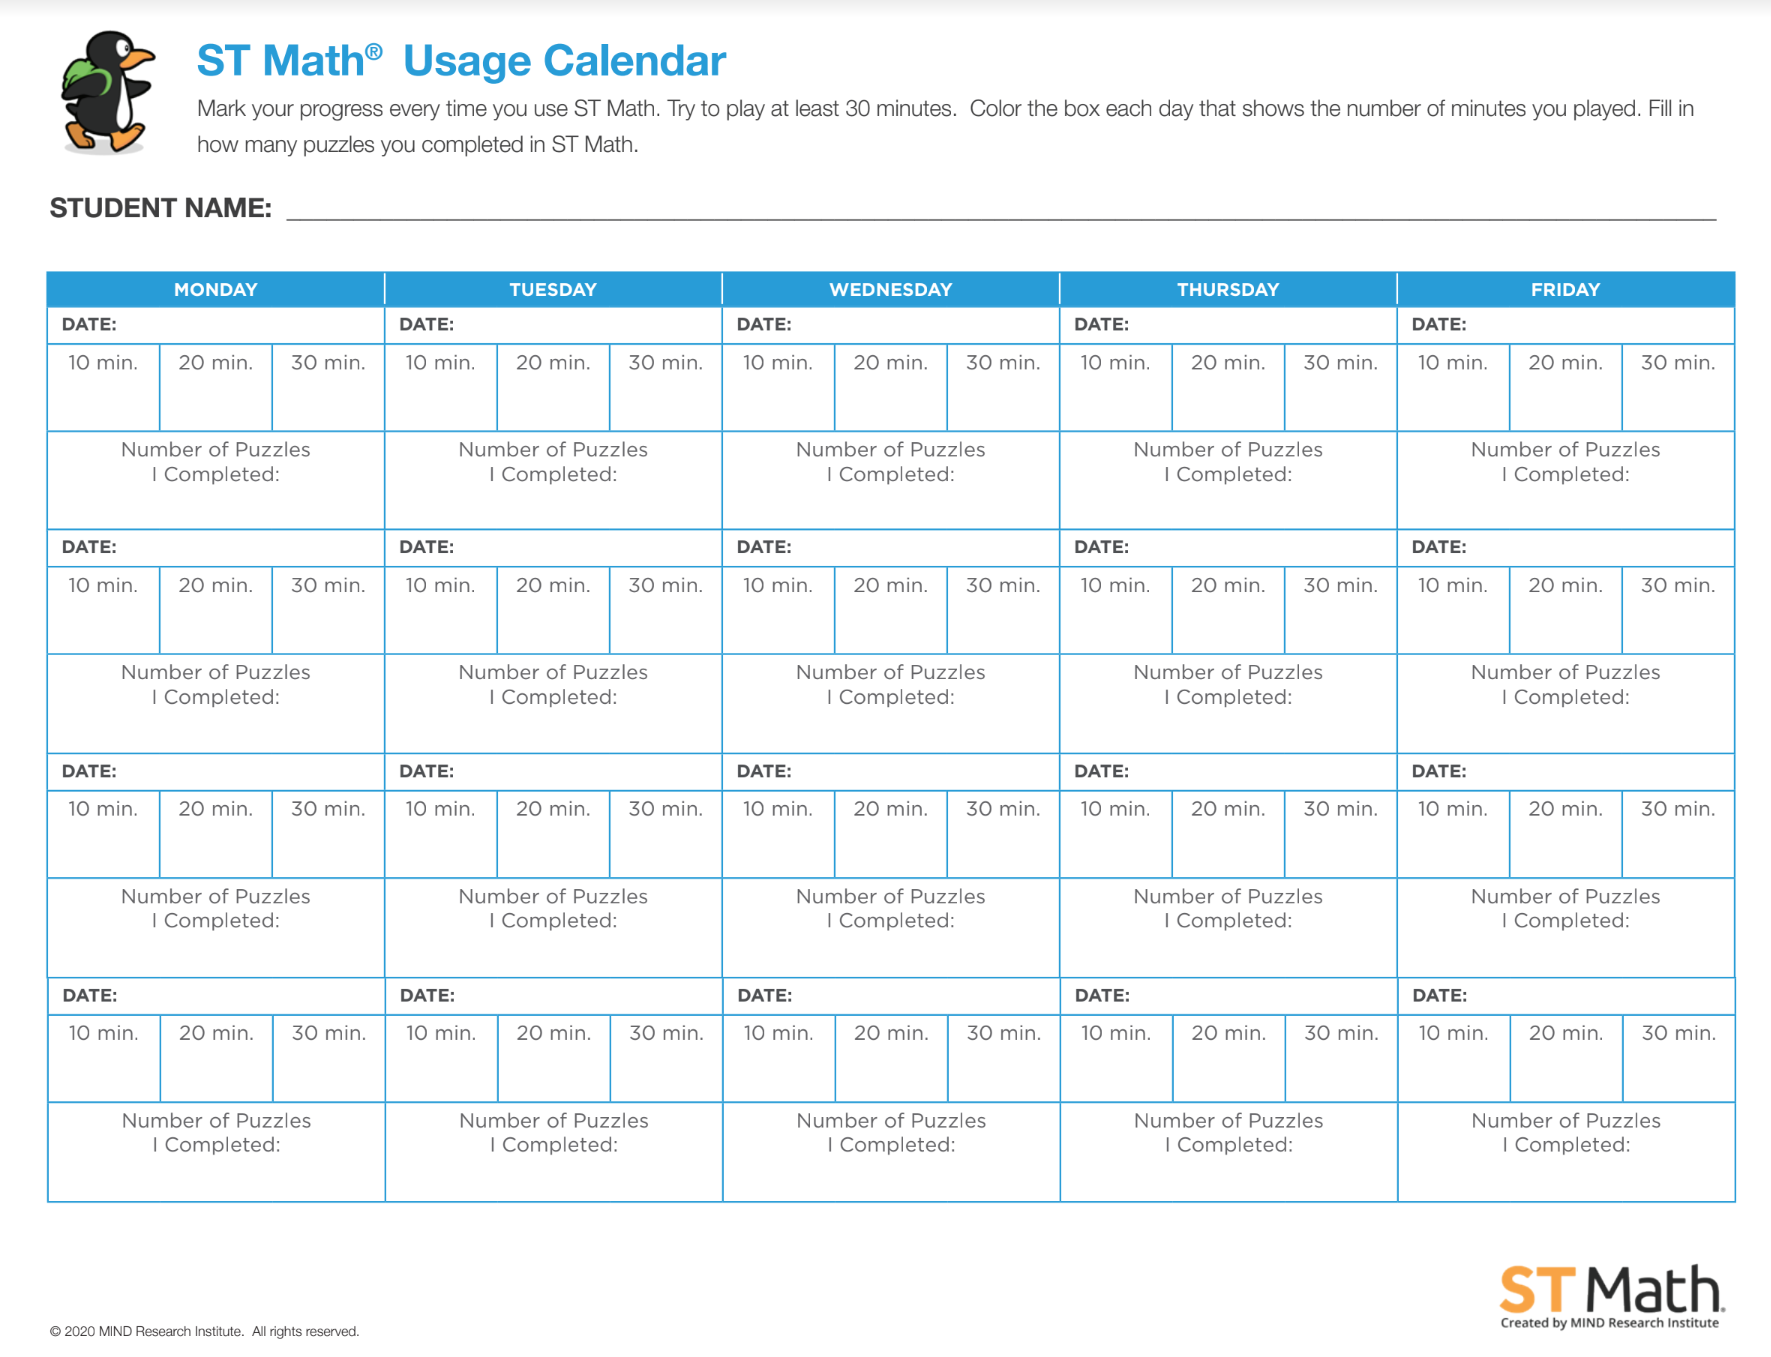 ST_Math_Usage_Calendar